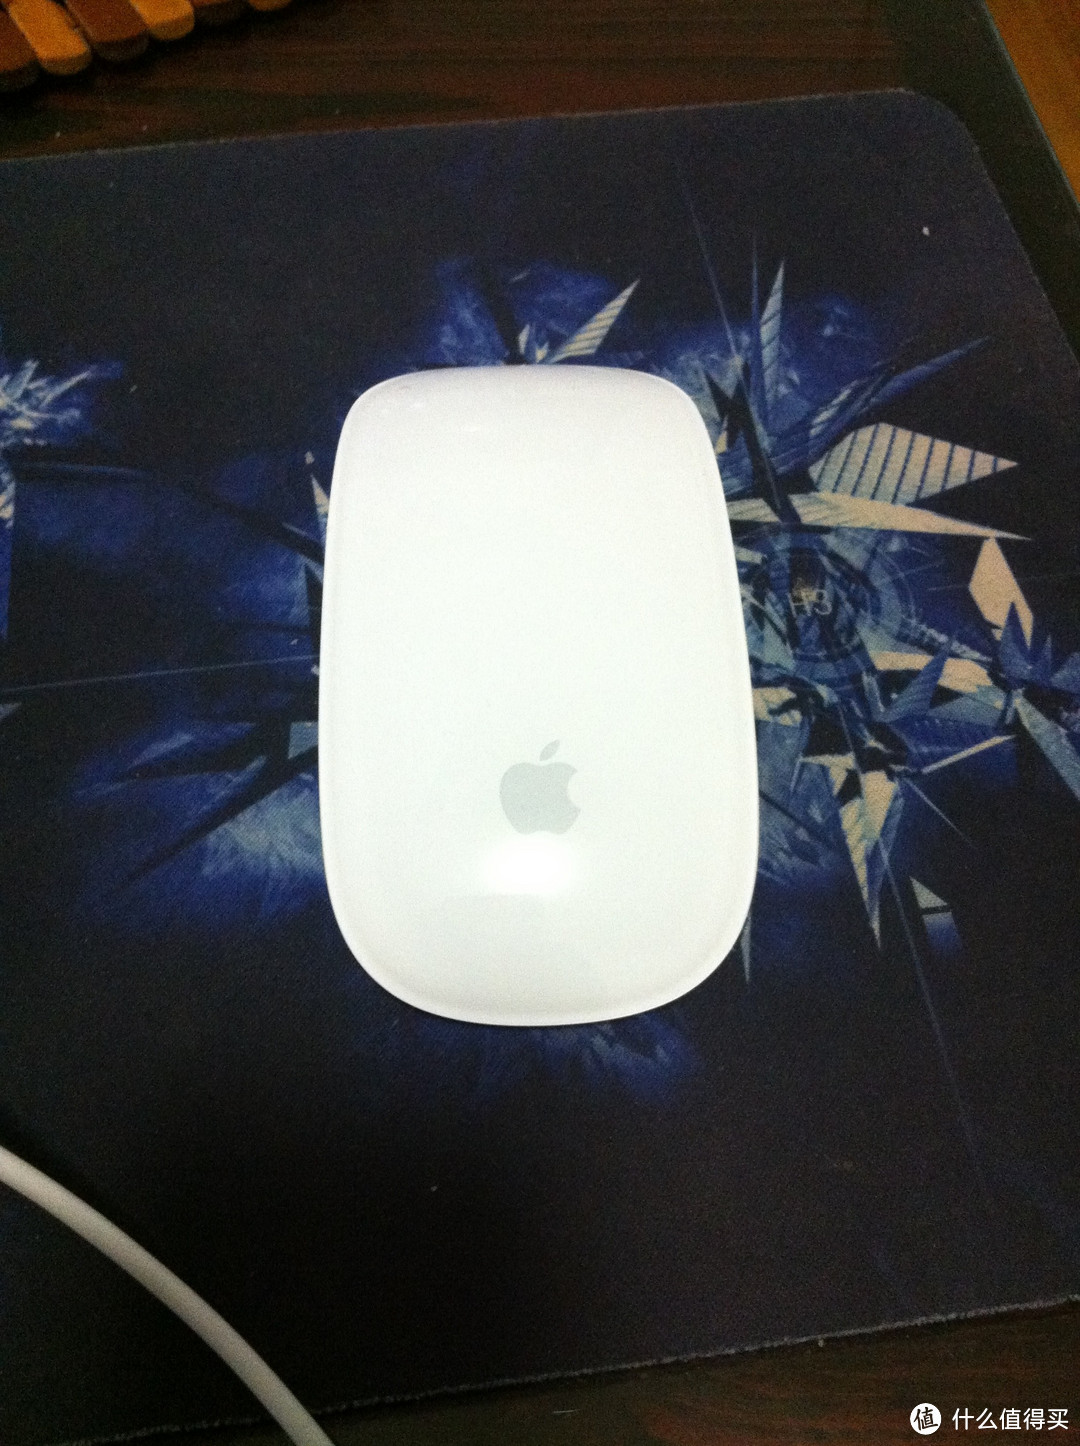 新时代文艺青年范——Apple magic mouse